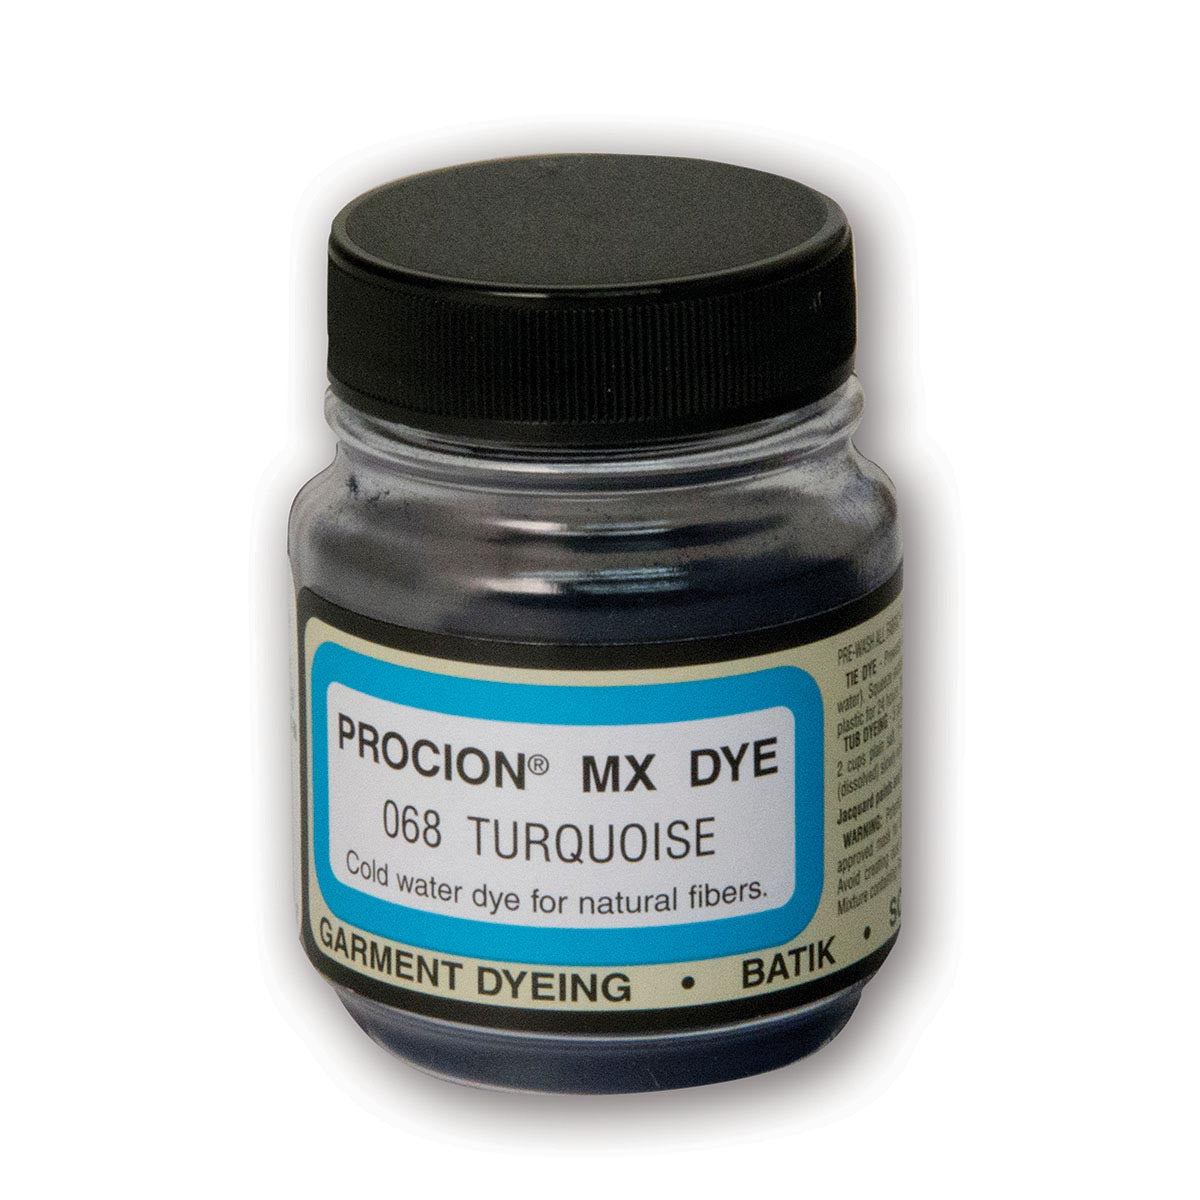 Jacquard - Procion MX Dye - Fabric Textile - Turquoise 068